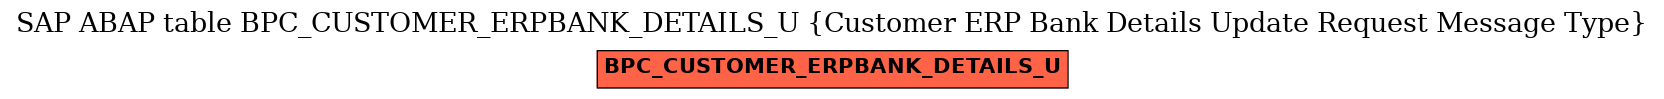 E-R Diagram for table BPC_CUSTOMER_ERPBANK_DETAILS_U (Customer ERP Bank Details Update Request Message Type)